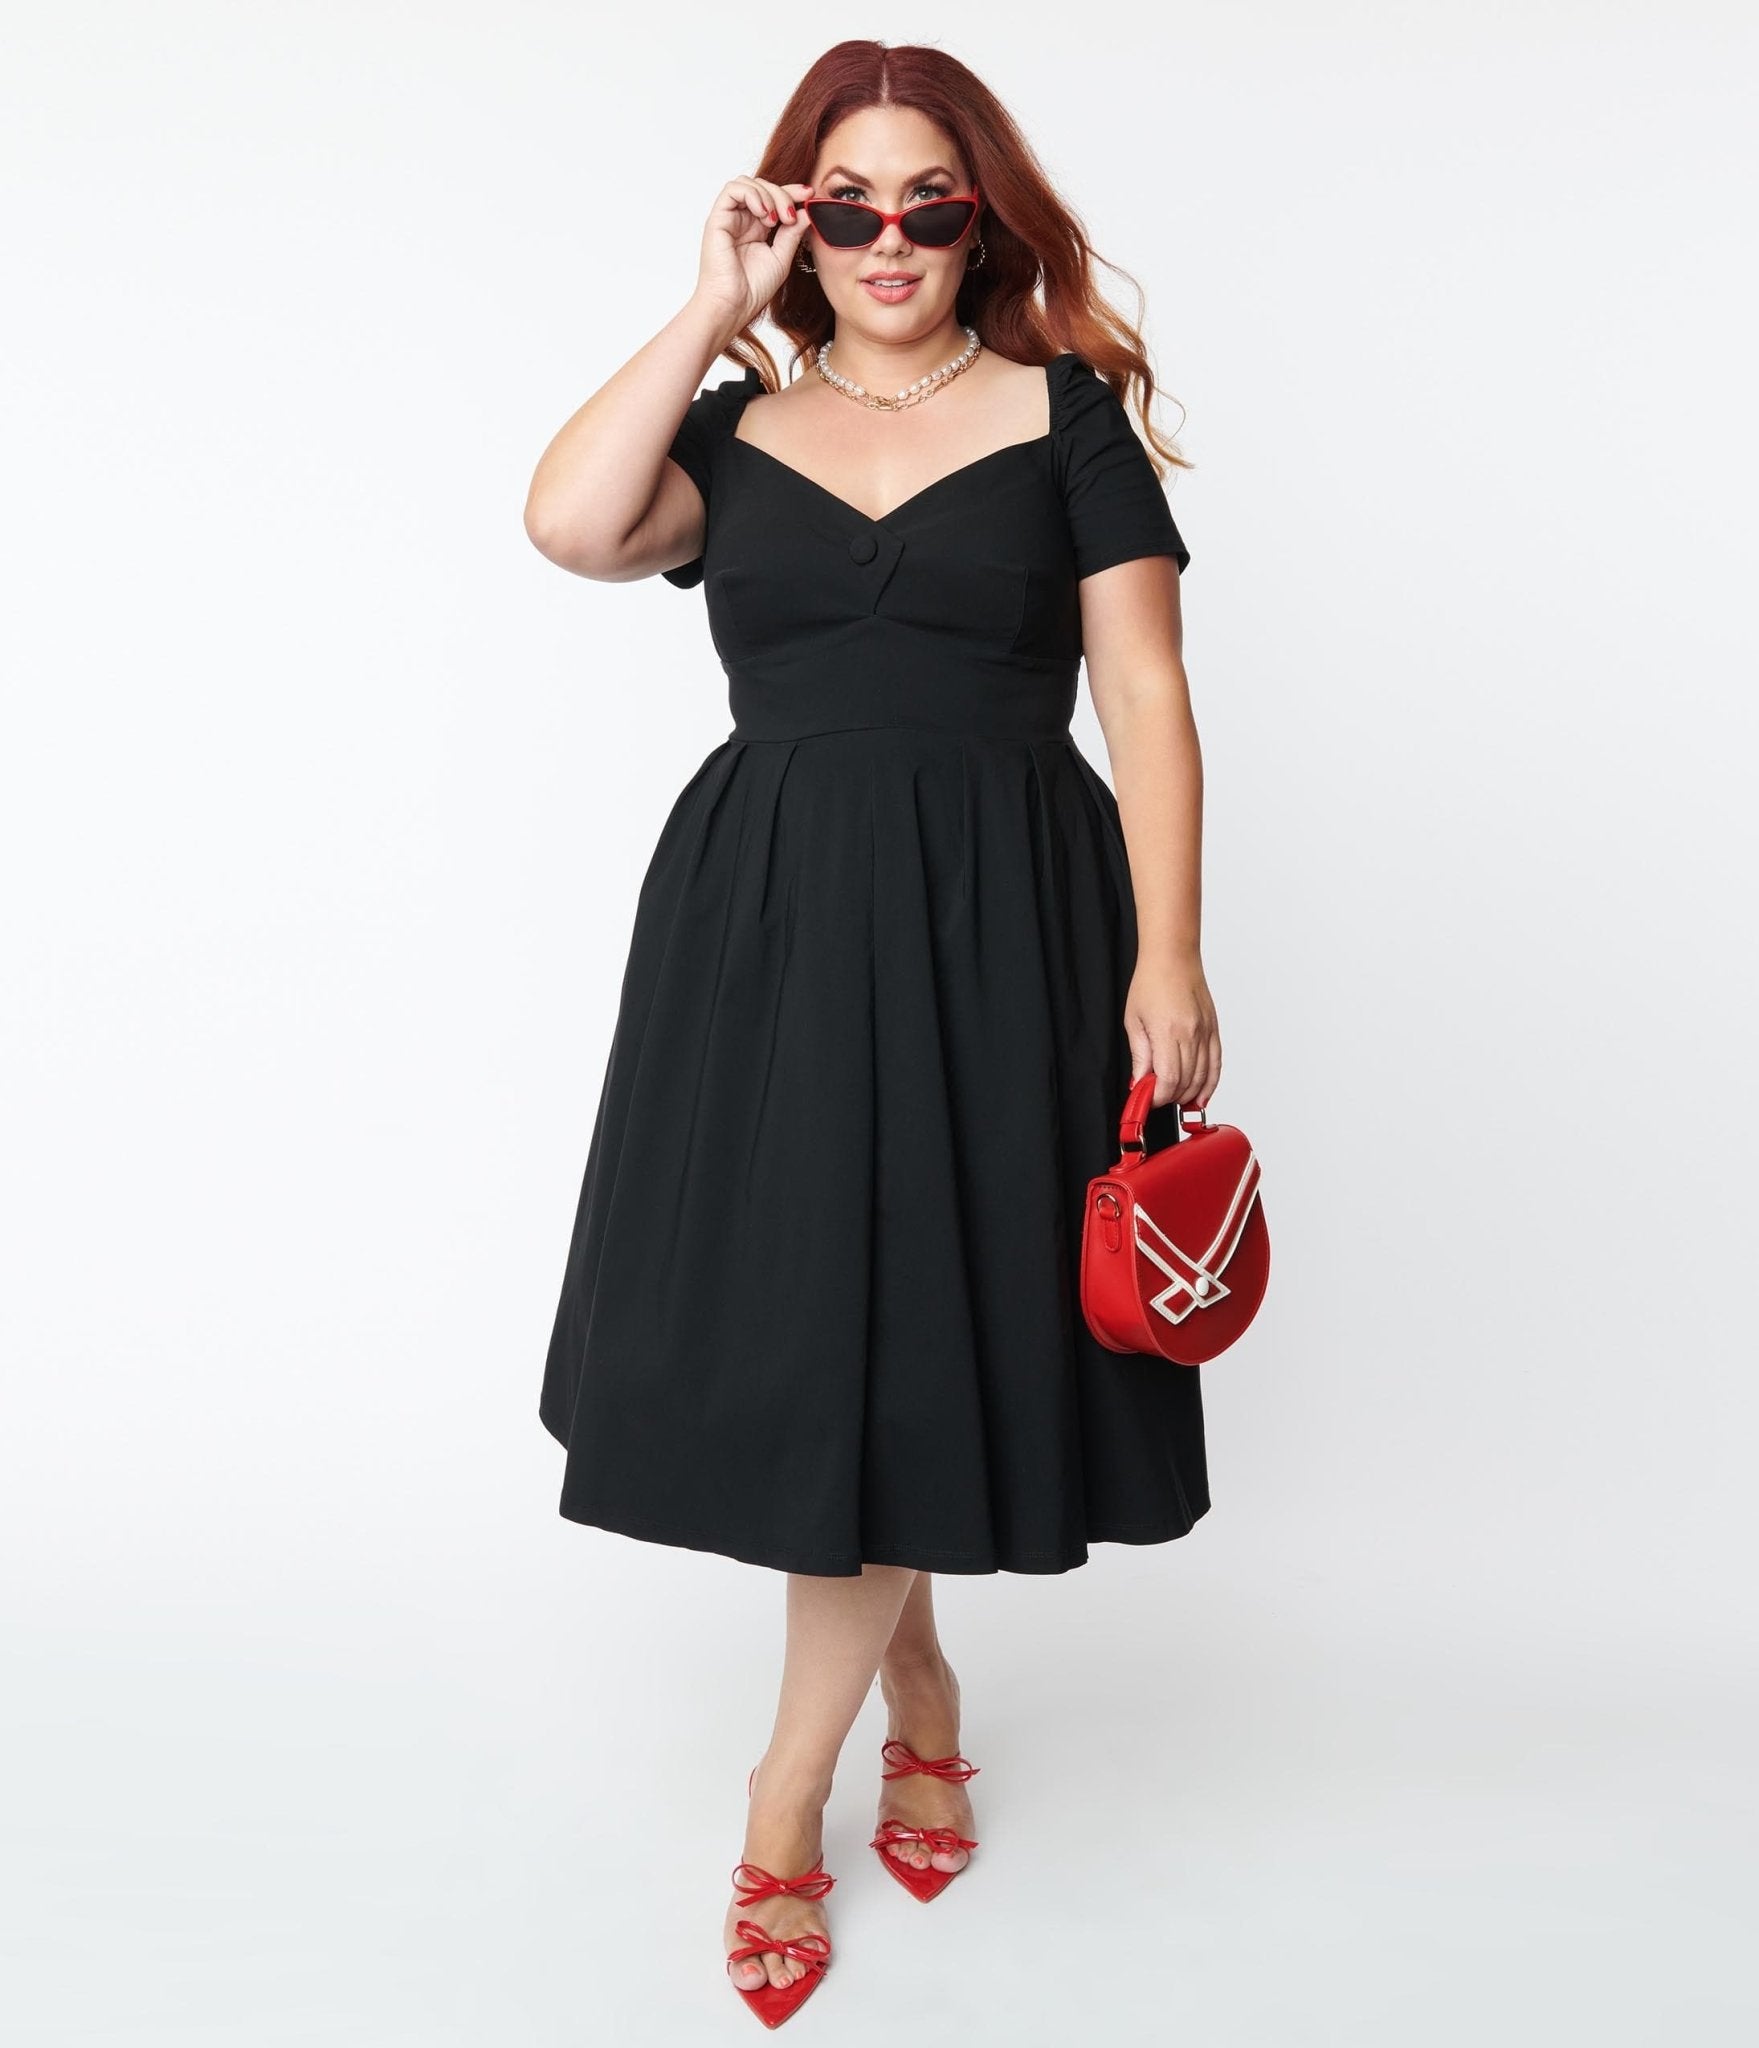 Best dress designers for mid size/ plus size women